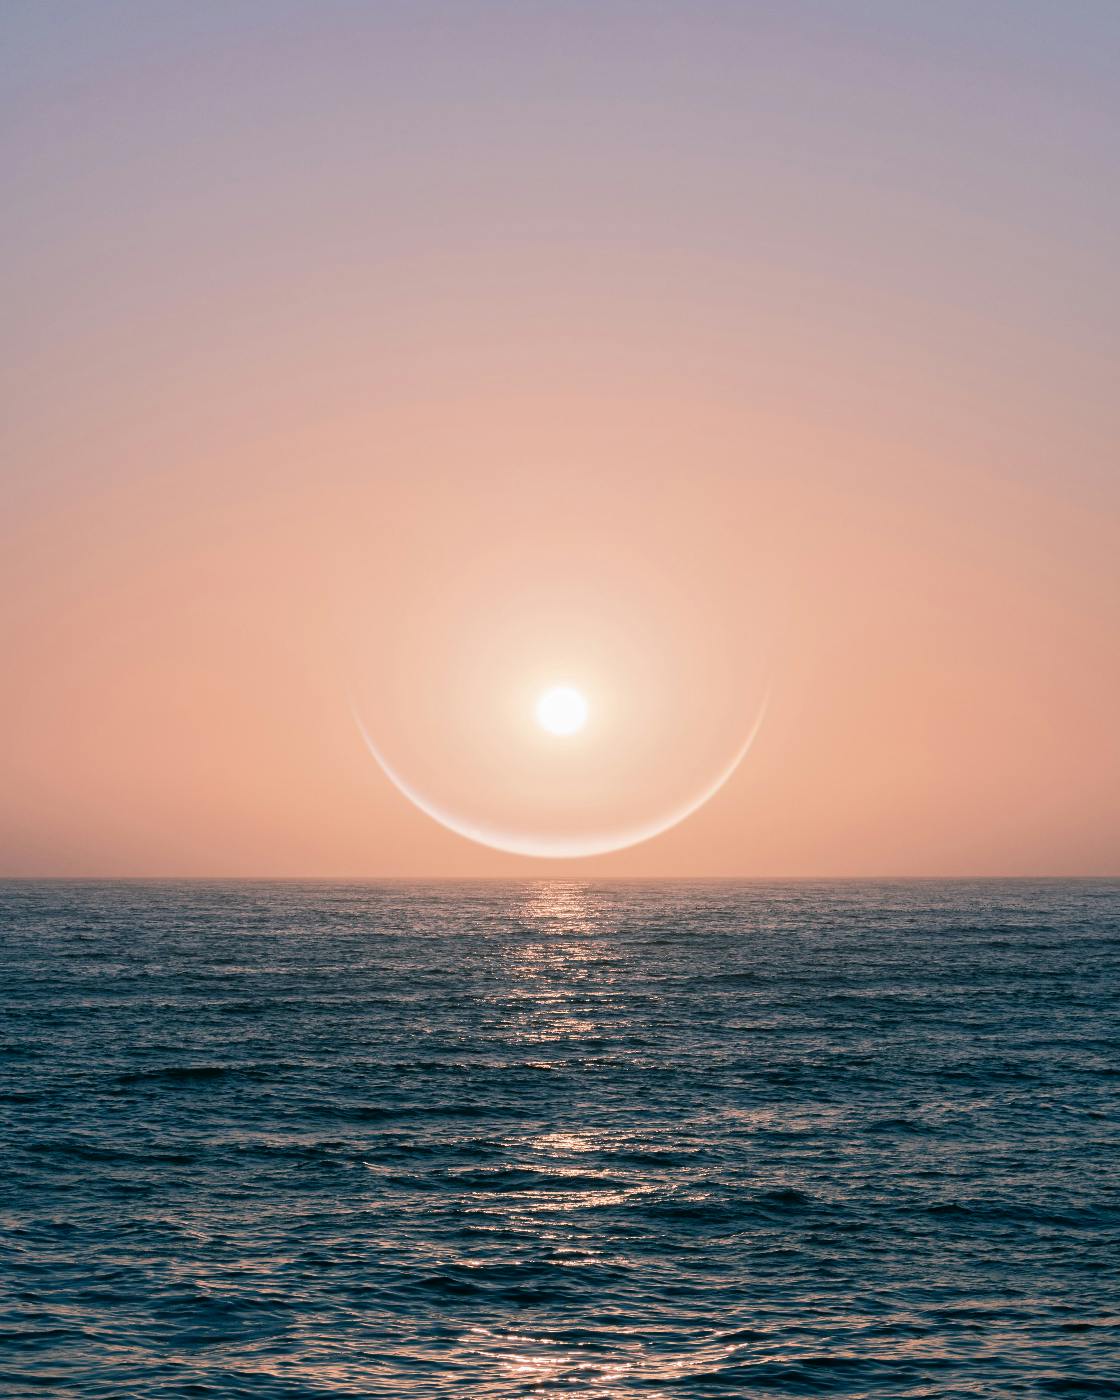 A sun dog over the horizon